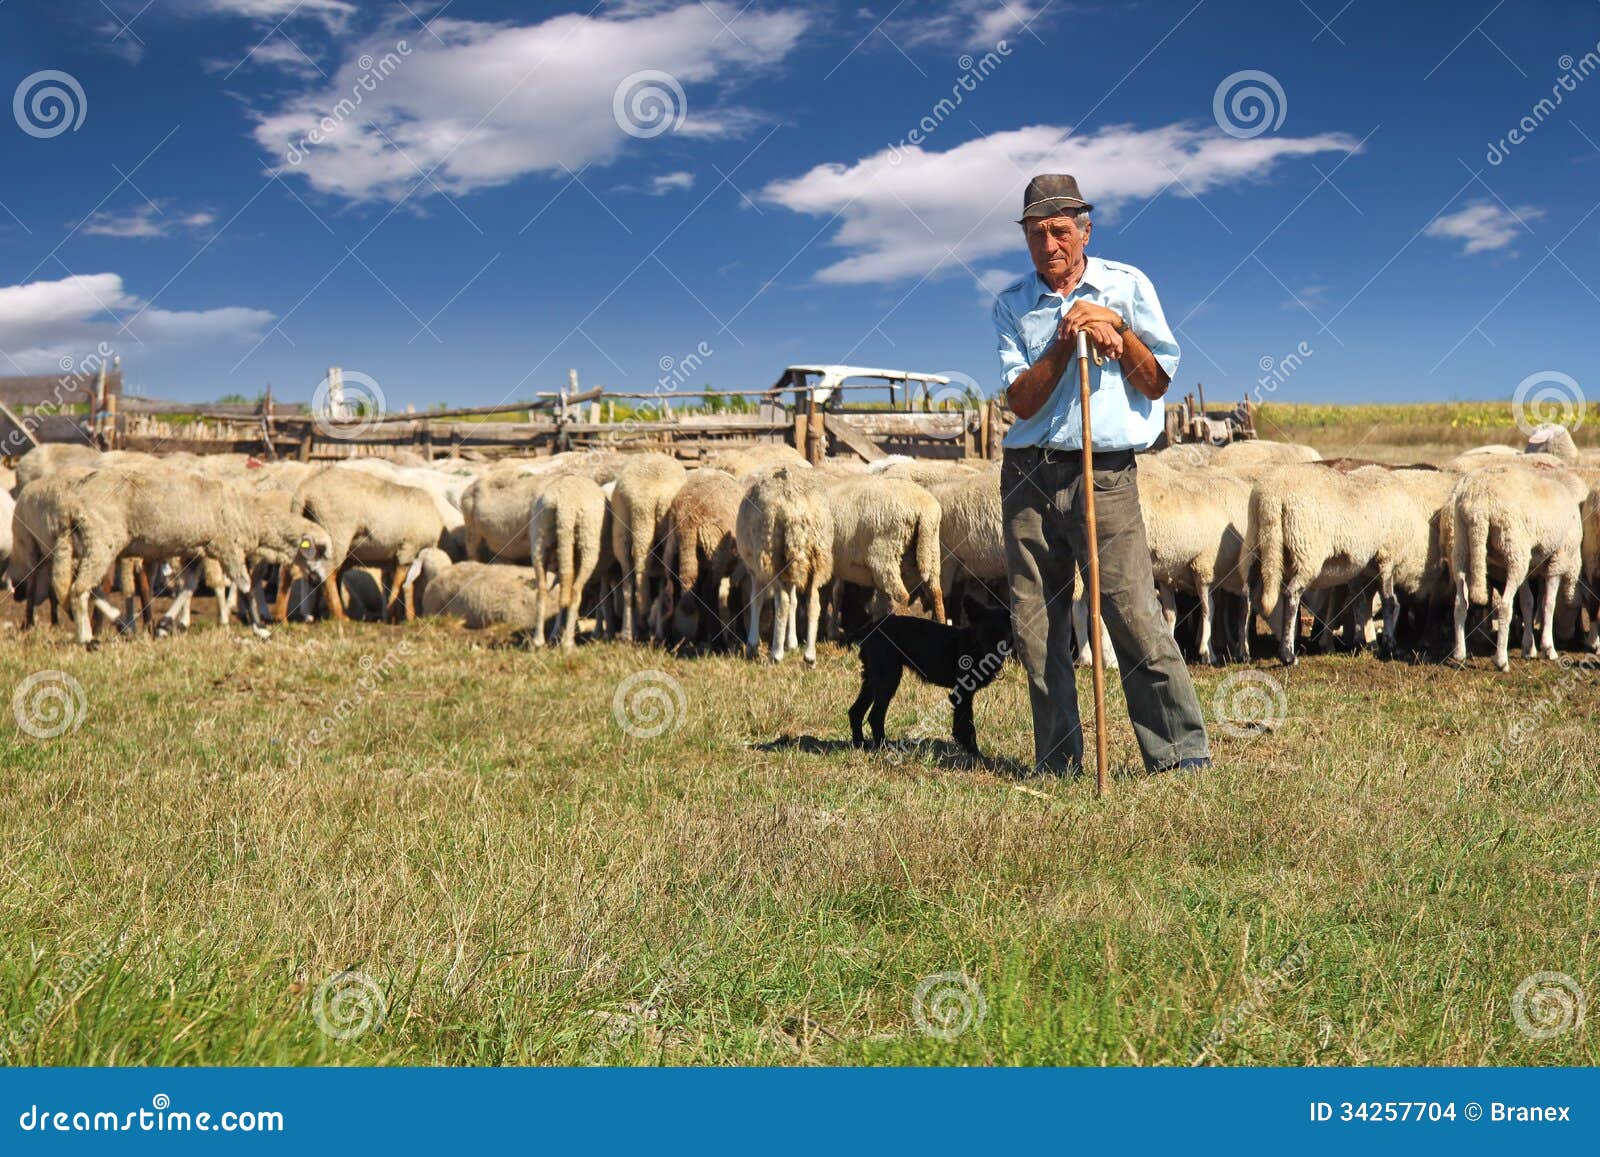 shepherd with grazing sheep